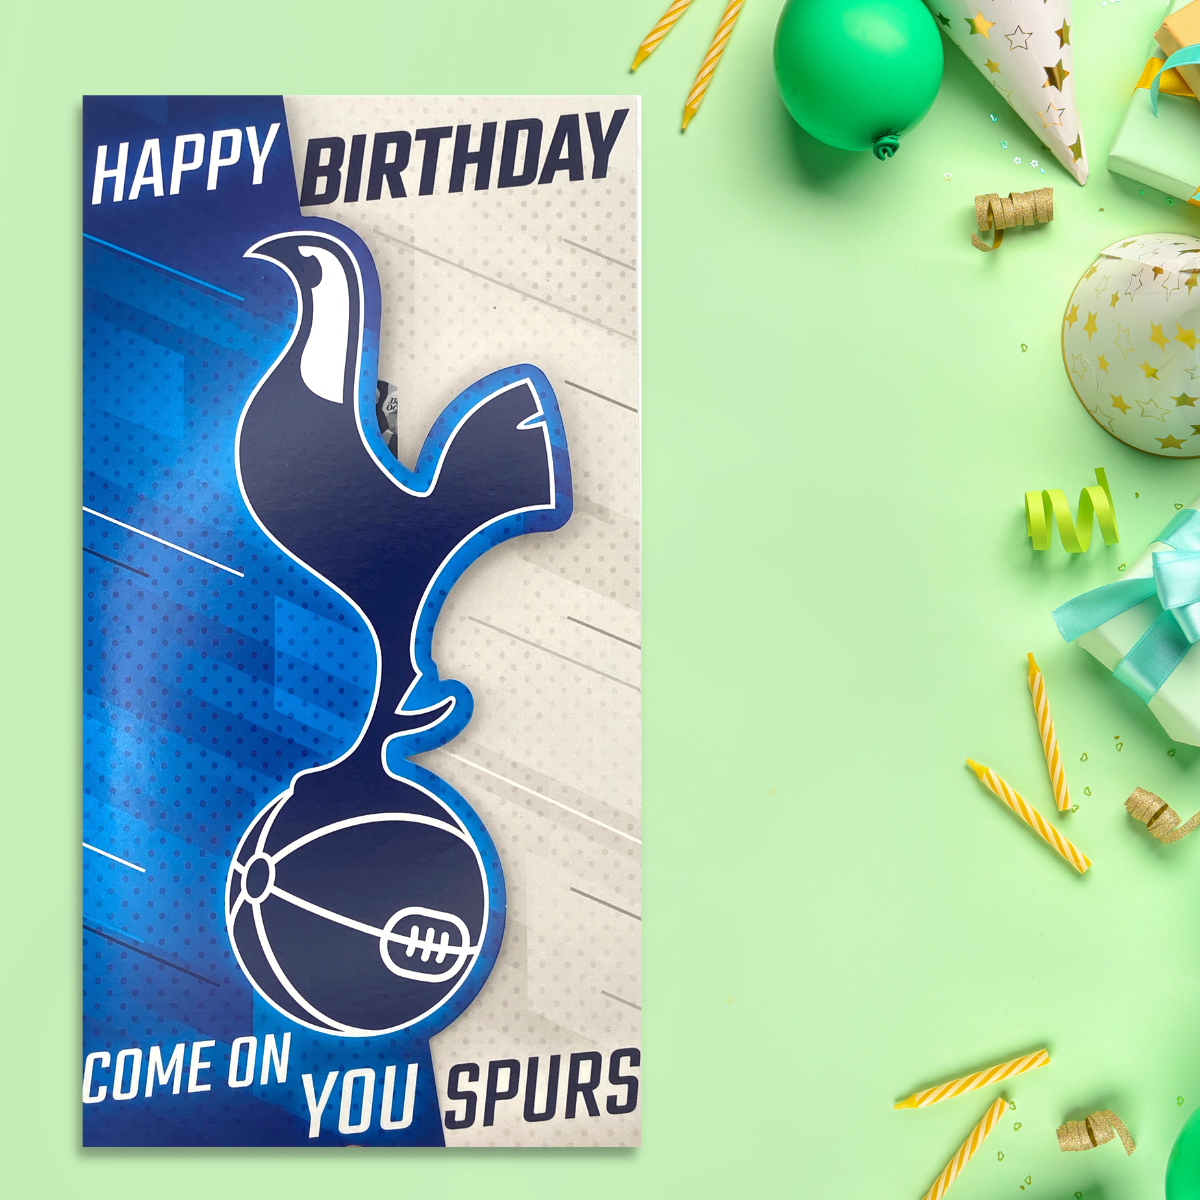 Tottenham Hotspur Football Club Greeting Card Displayed In Full